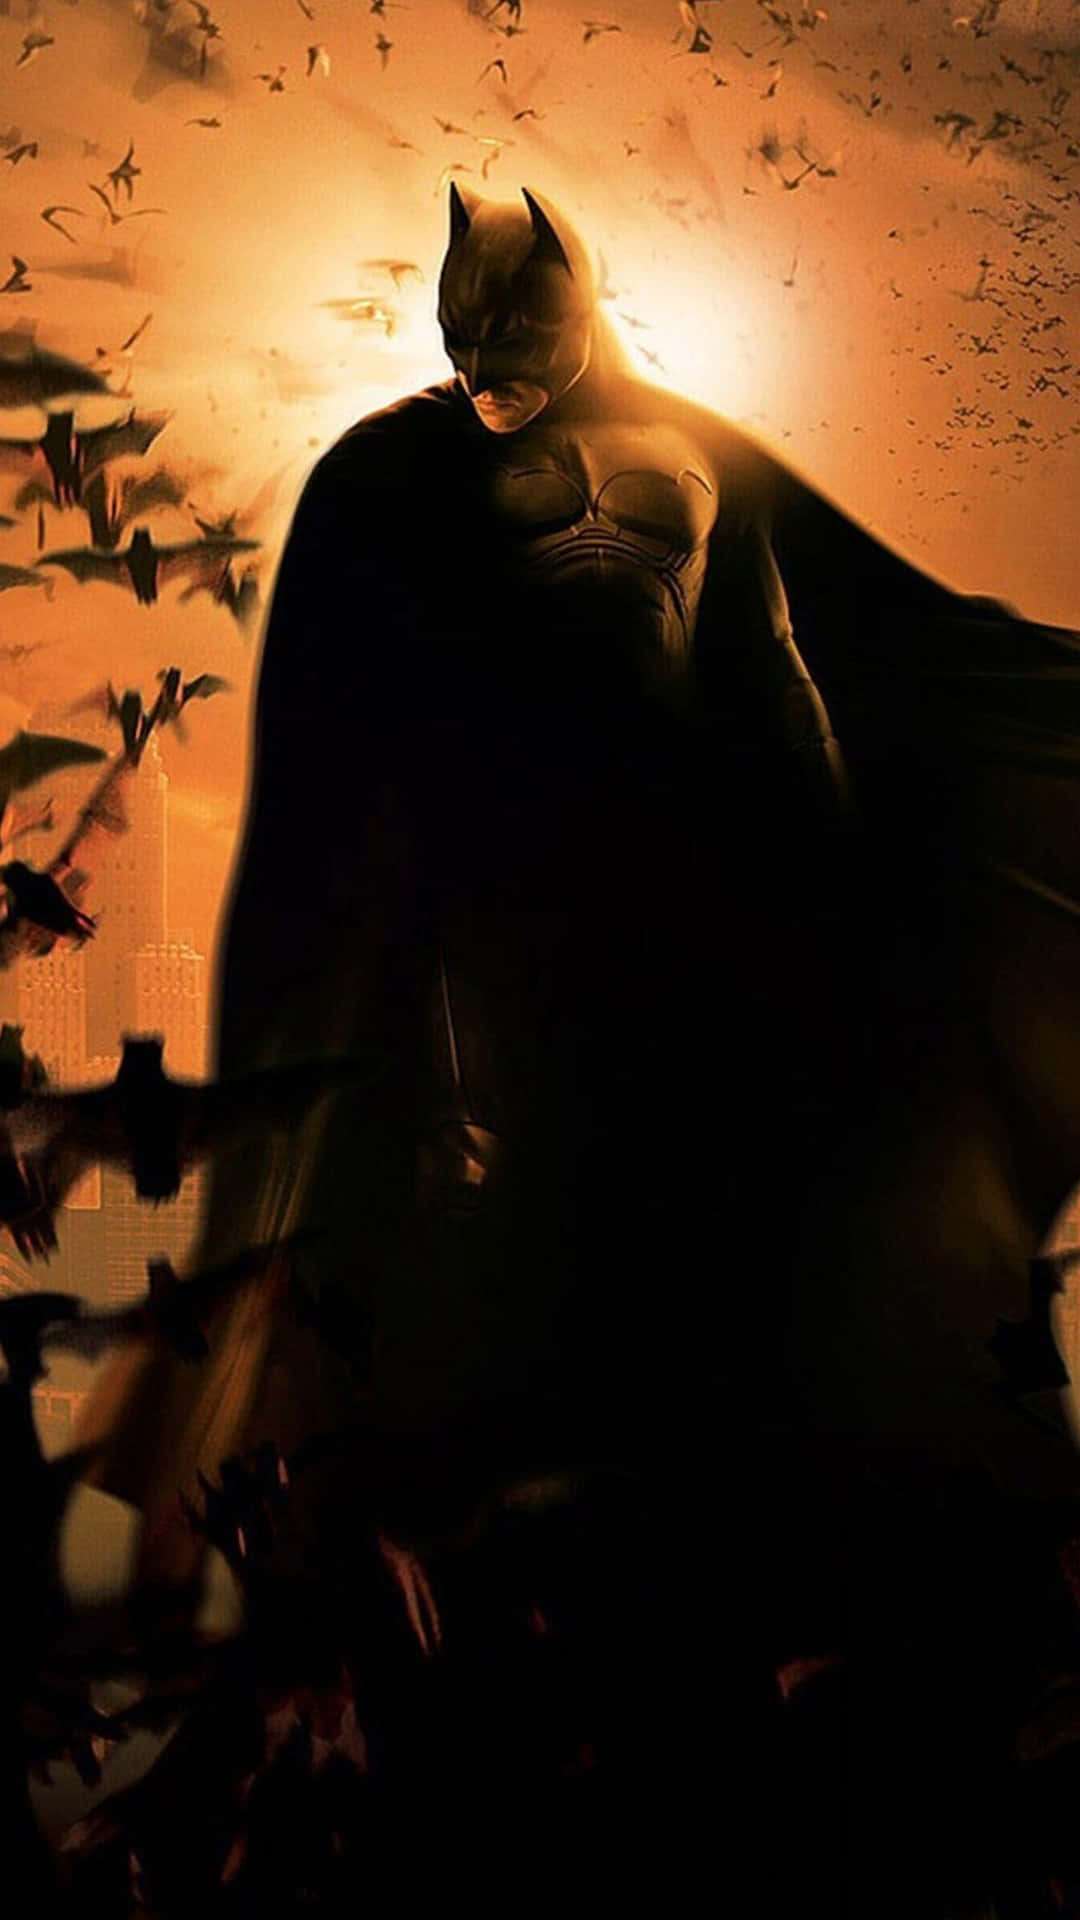 Electric Superhero - Batman Android Wallpaper